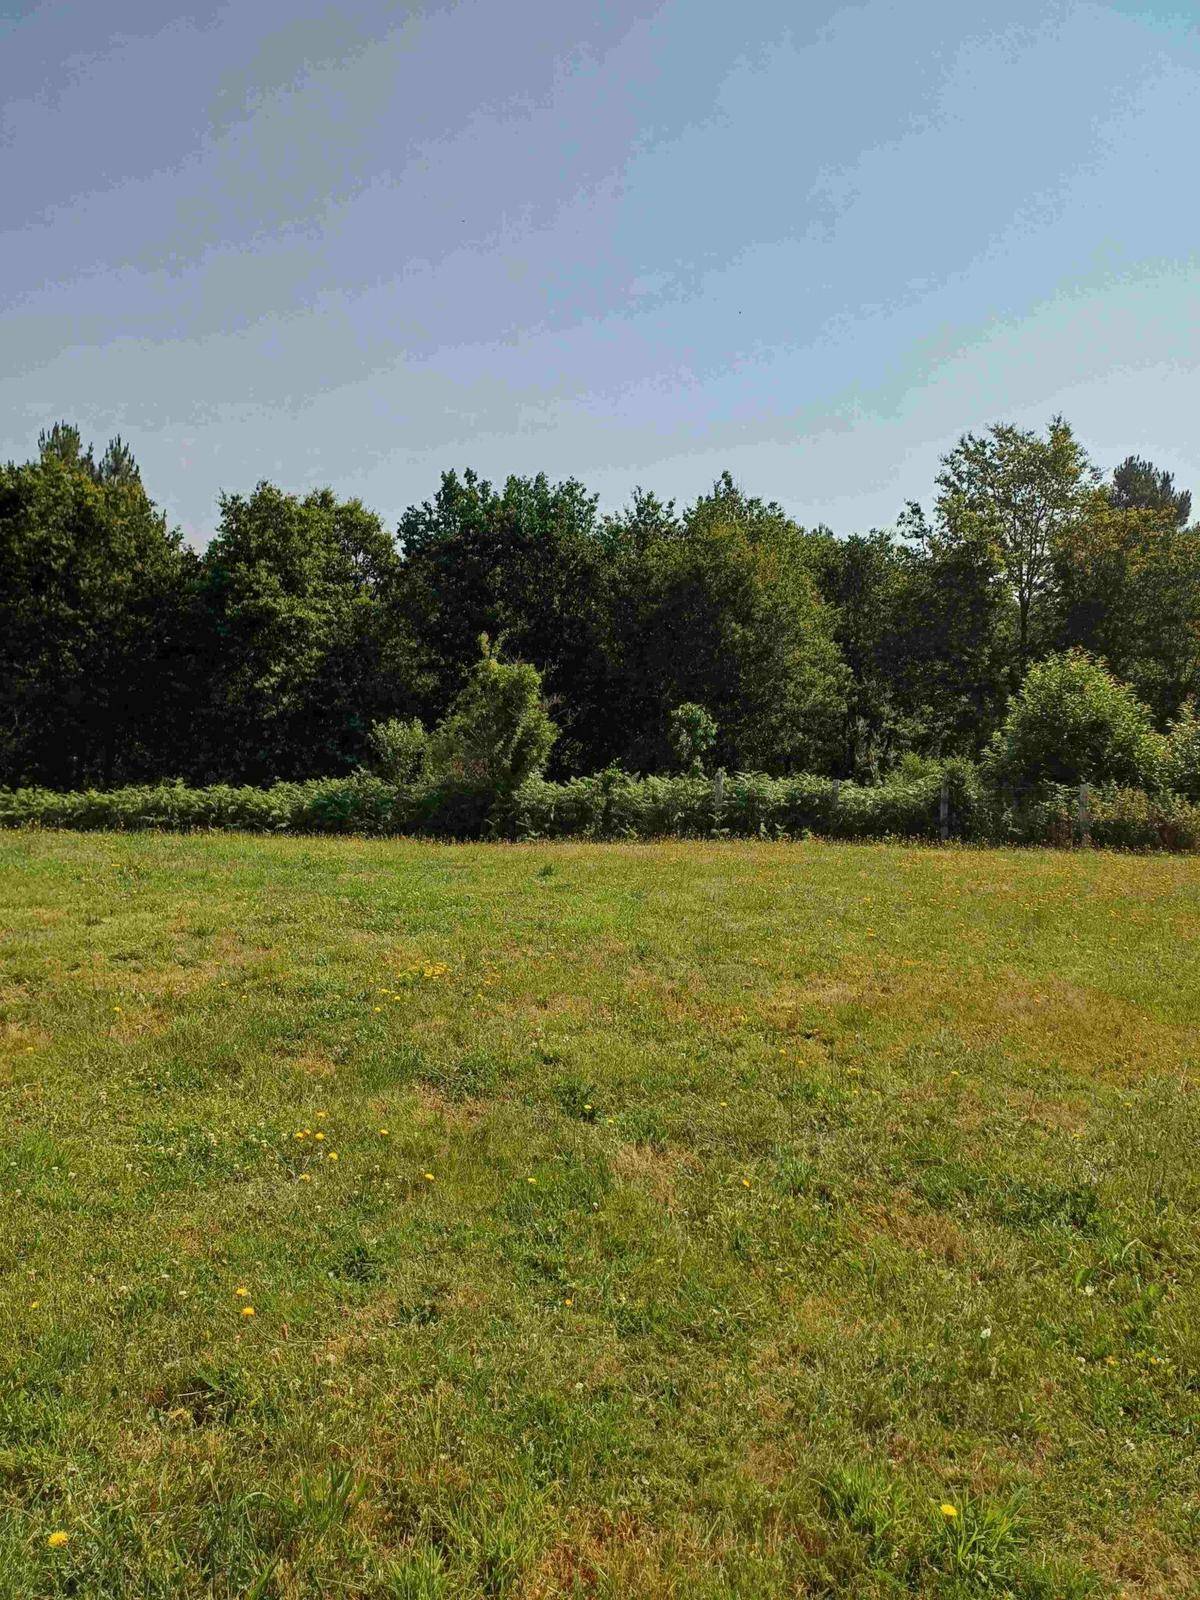 Terrain seul à La Bazoge en Sarthe (72) de 445 m² à vendre au prix de 65999€ - 3